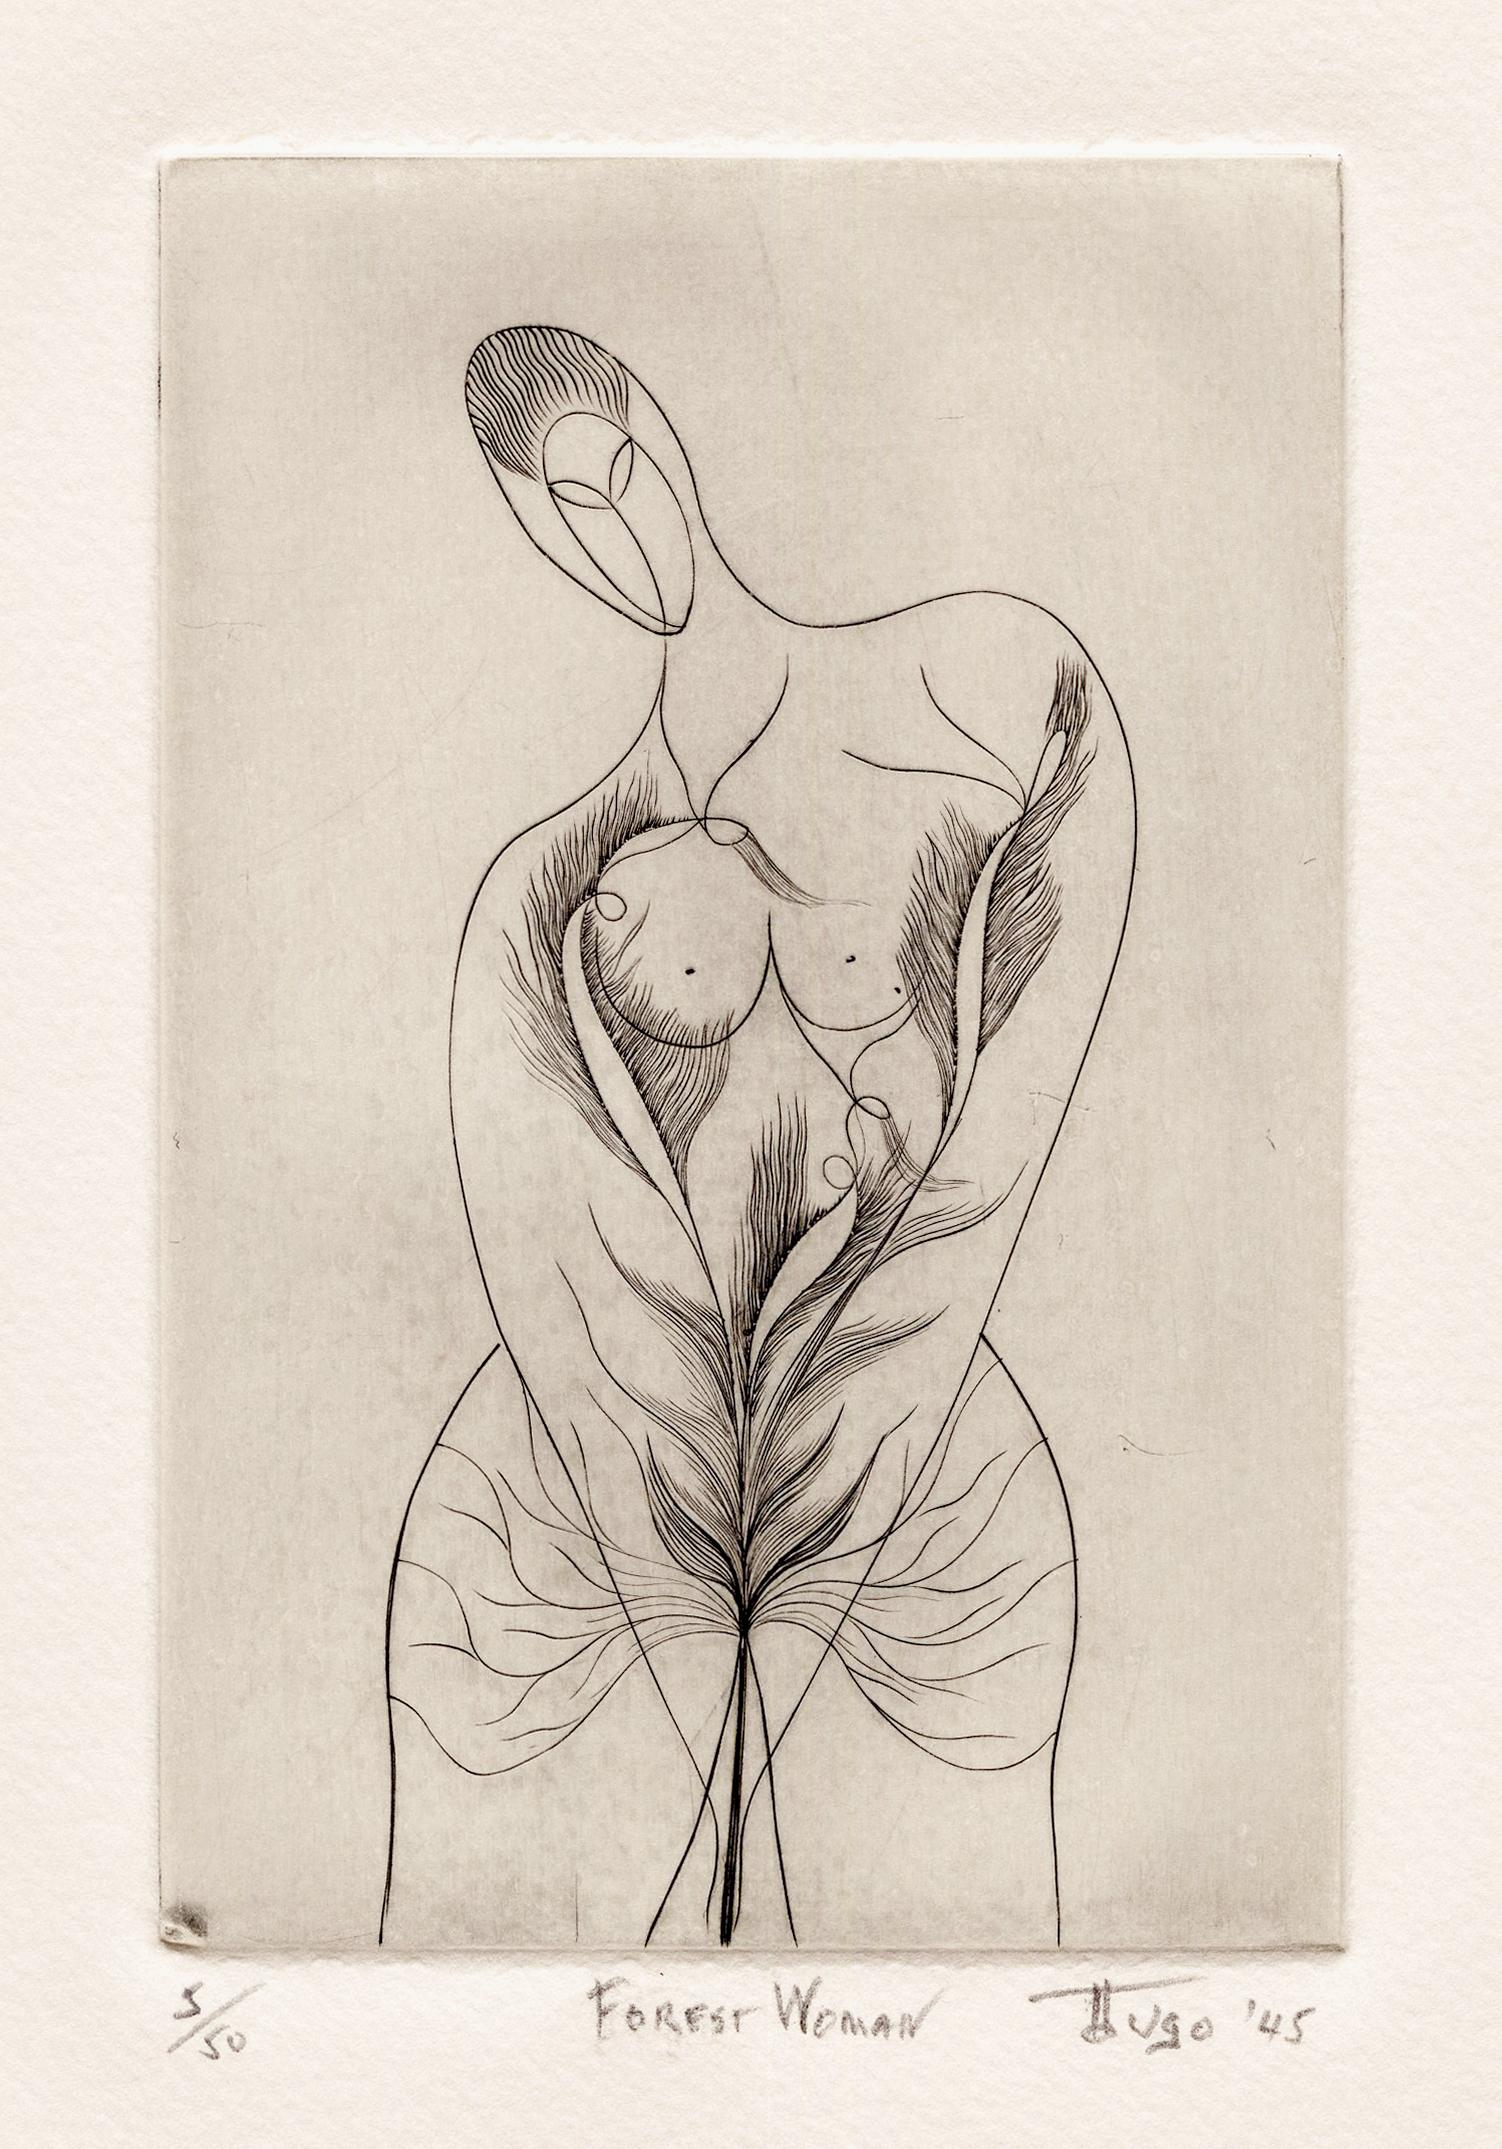 Ian Hugo Figurative Print - 'Forest Woman' — Mid-Century Surrealism, Atelier 17